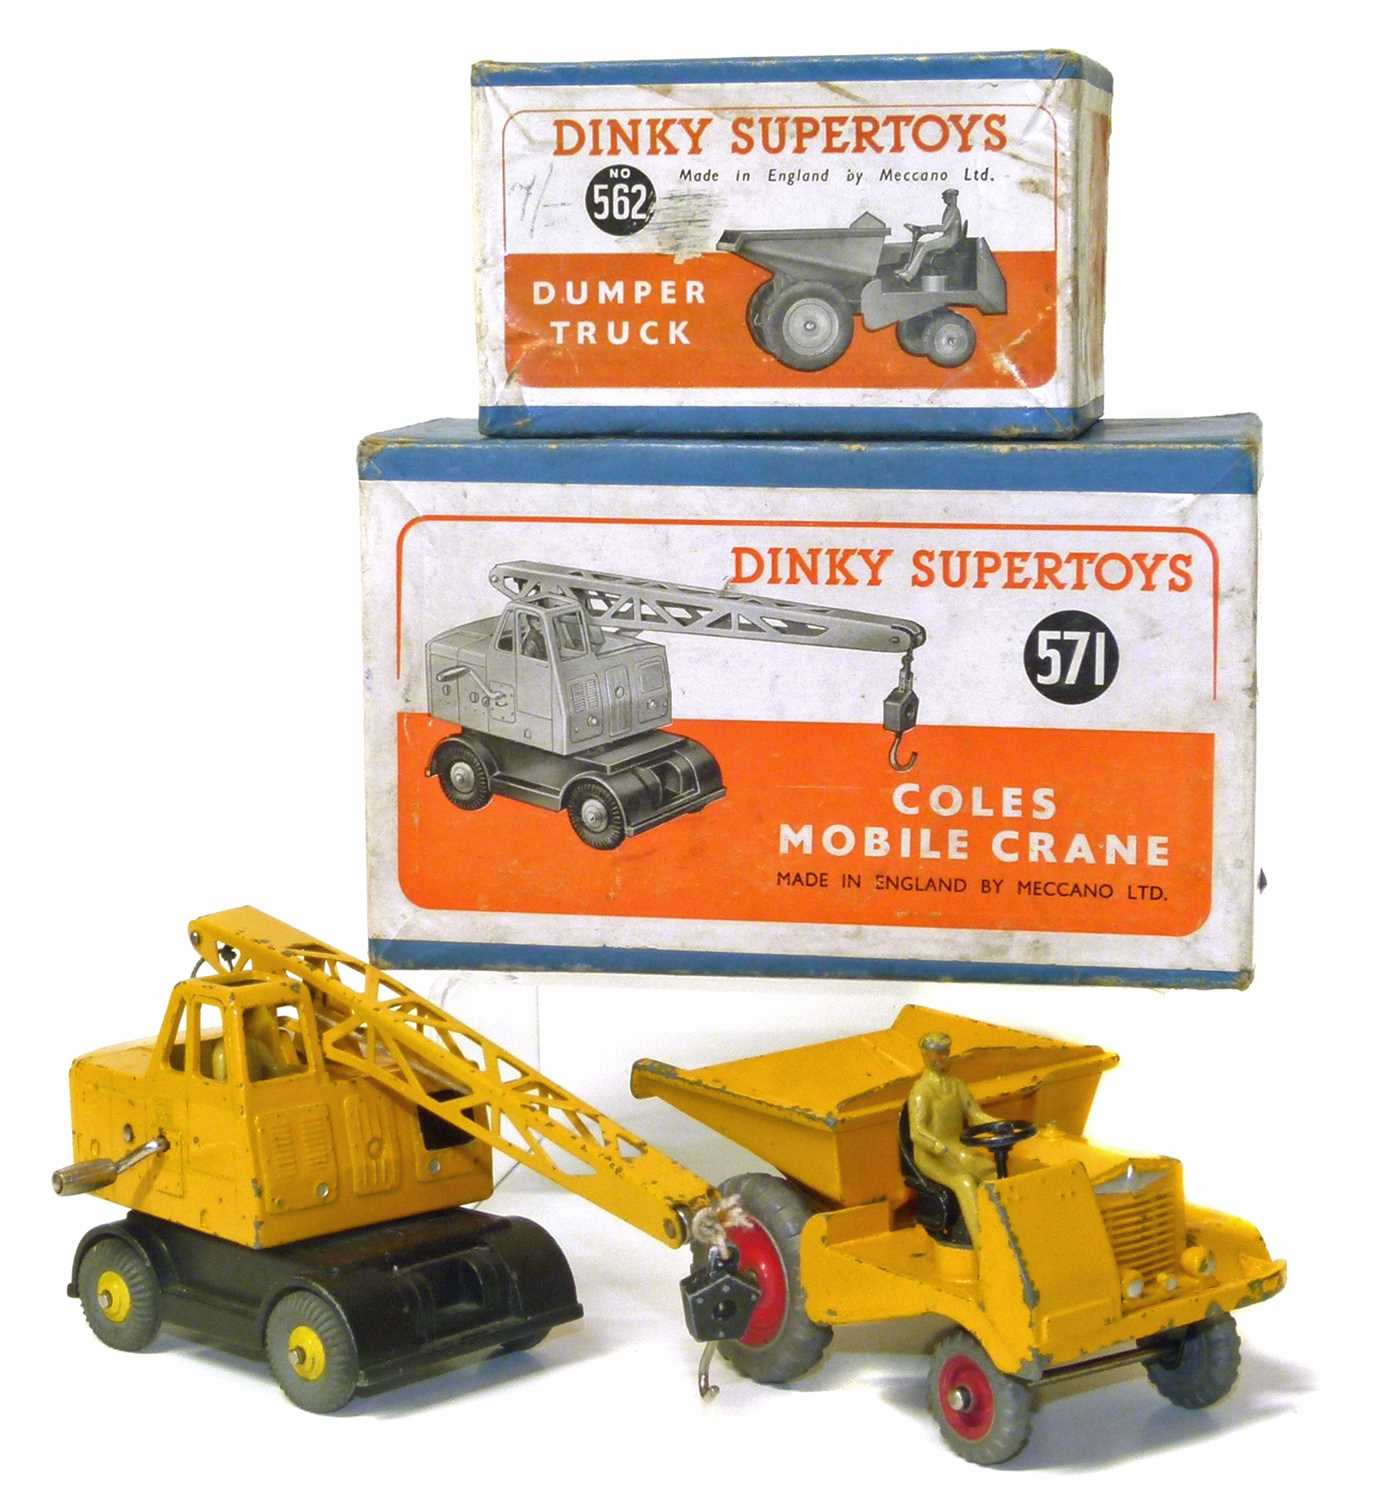 Lot 100 - Dinky Supertoys Coles mobile crane No. 571, and dumper truck No. 562 with original boxes.